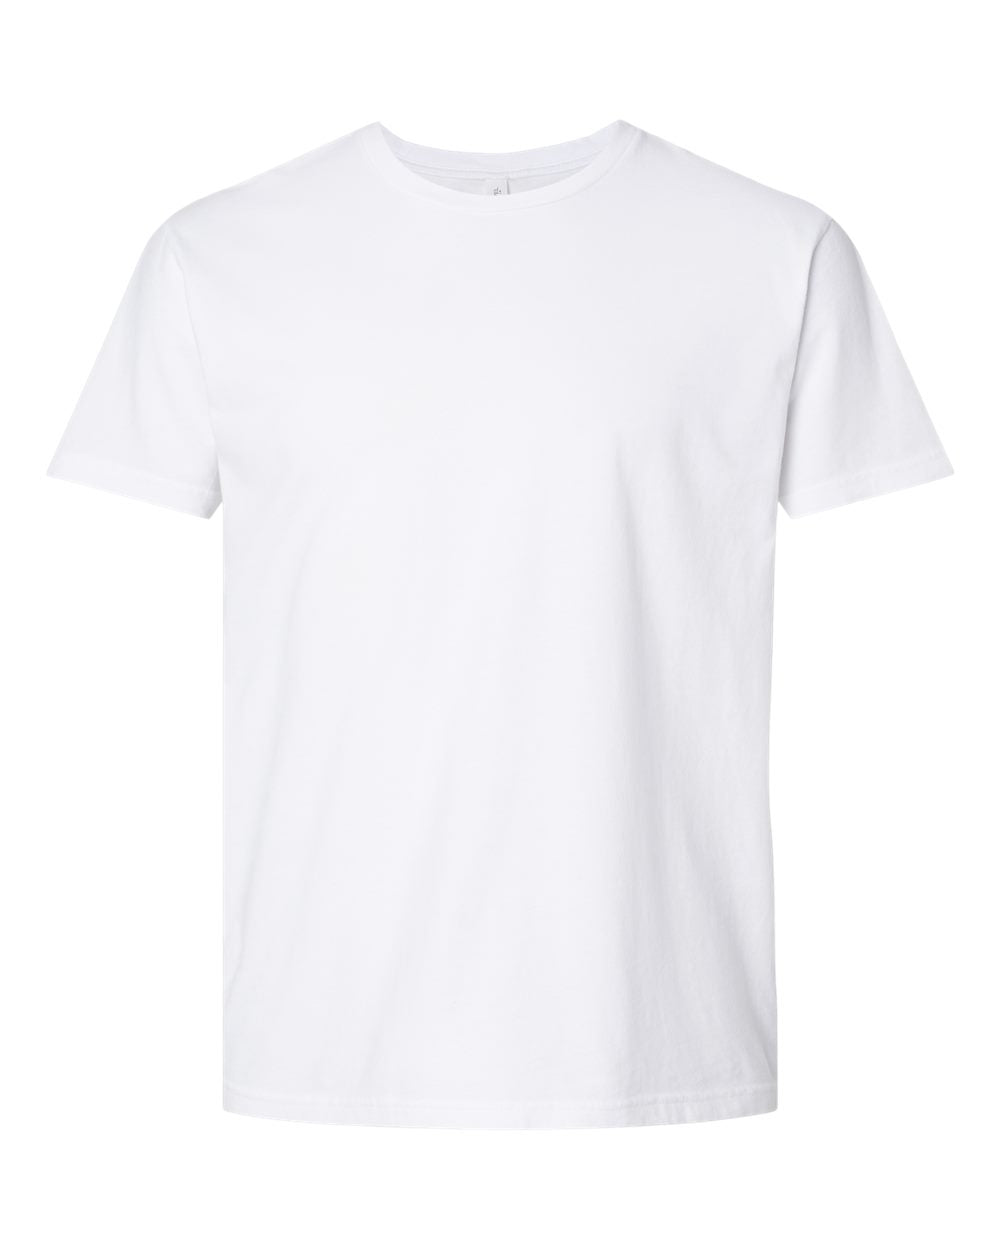 Next Level - Soft Wash T-Shirt - 3600SW